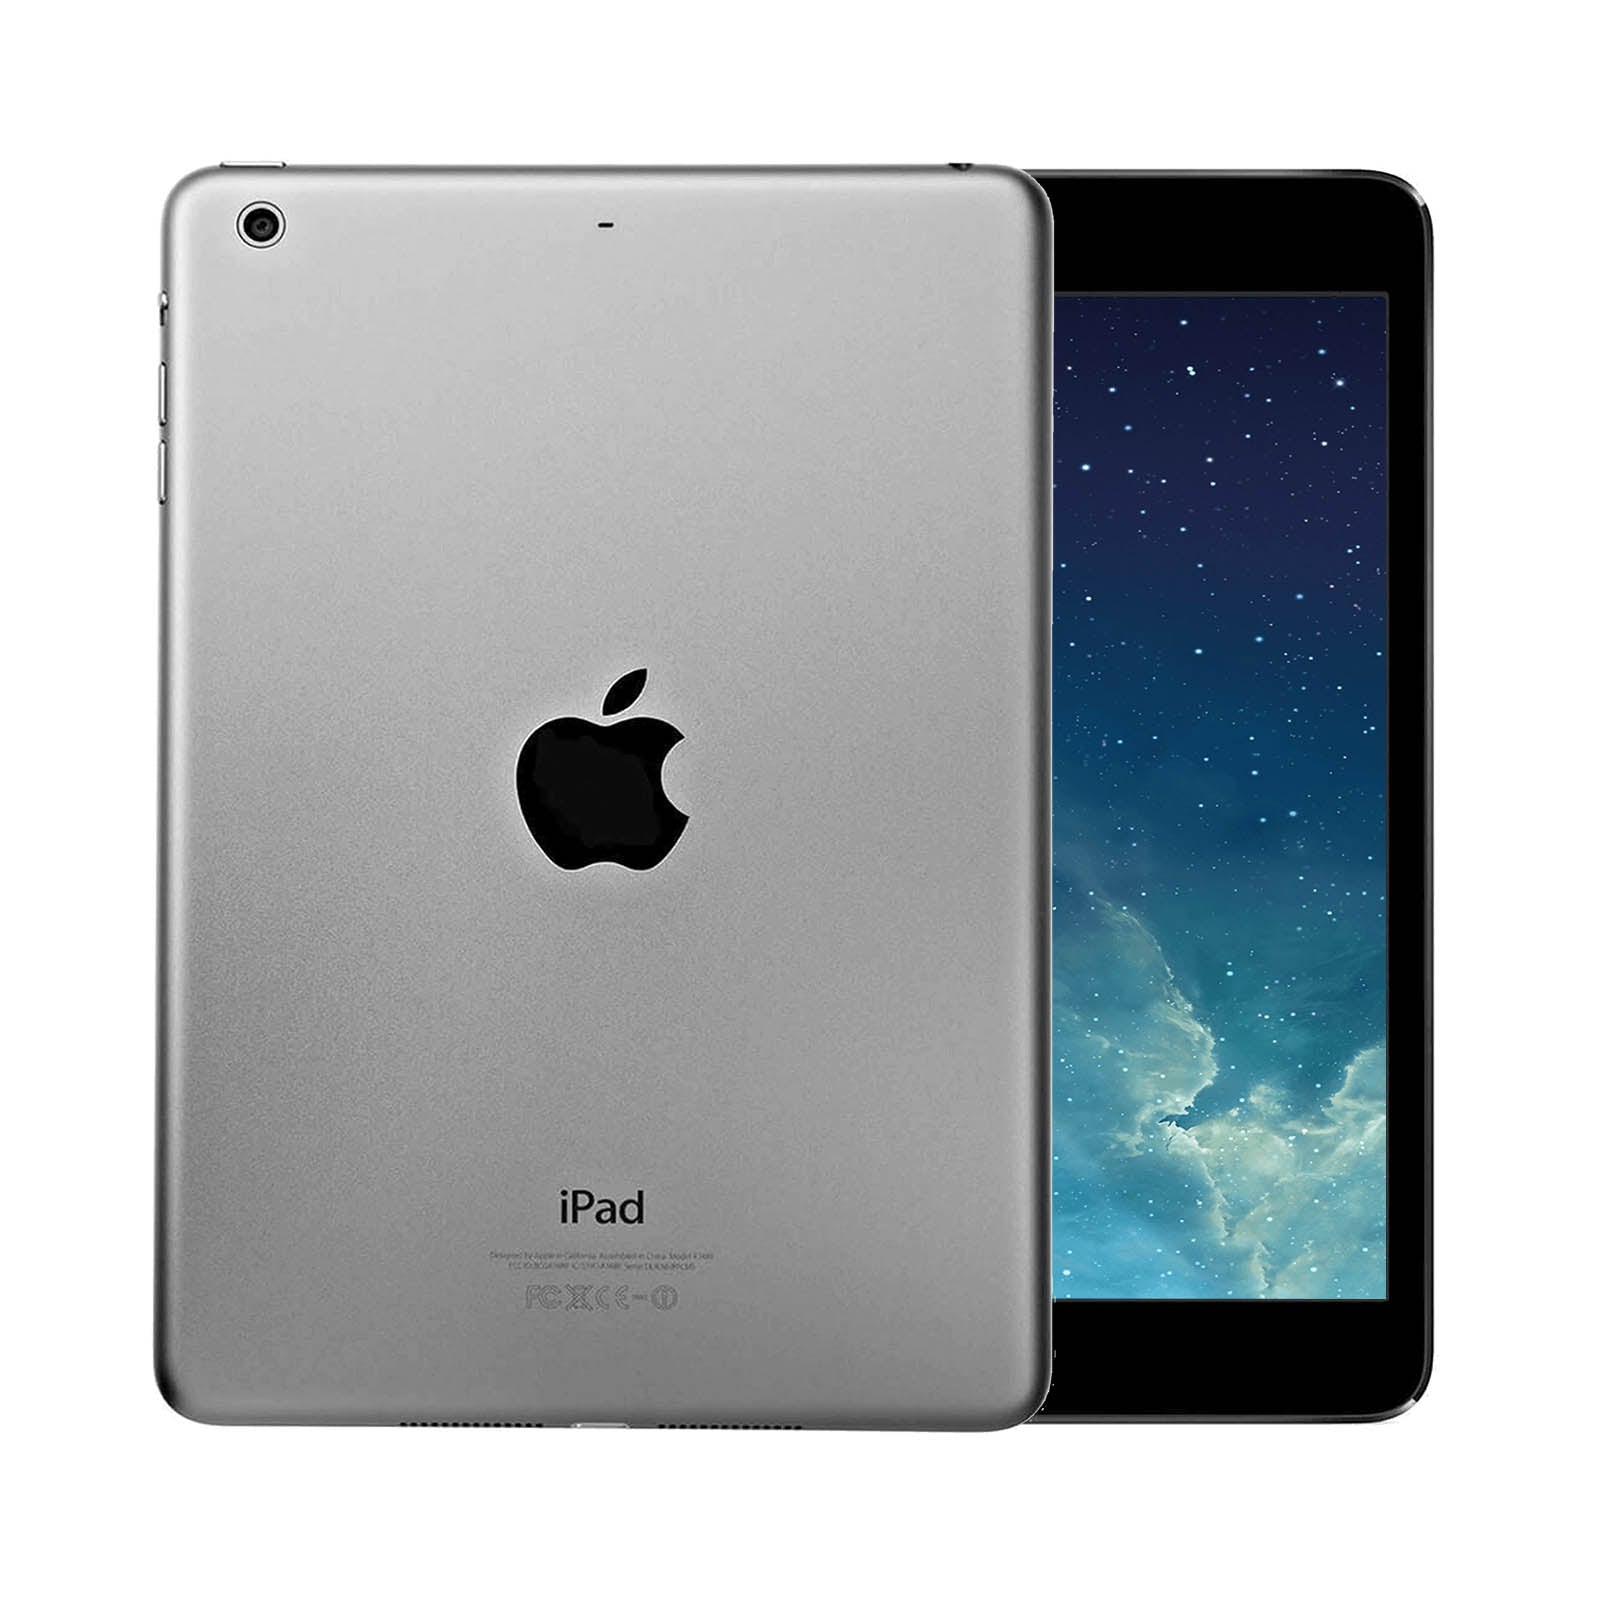 iPad Air 32GB WiFi Space Grey Good-Unlocked